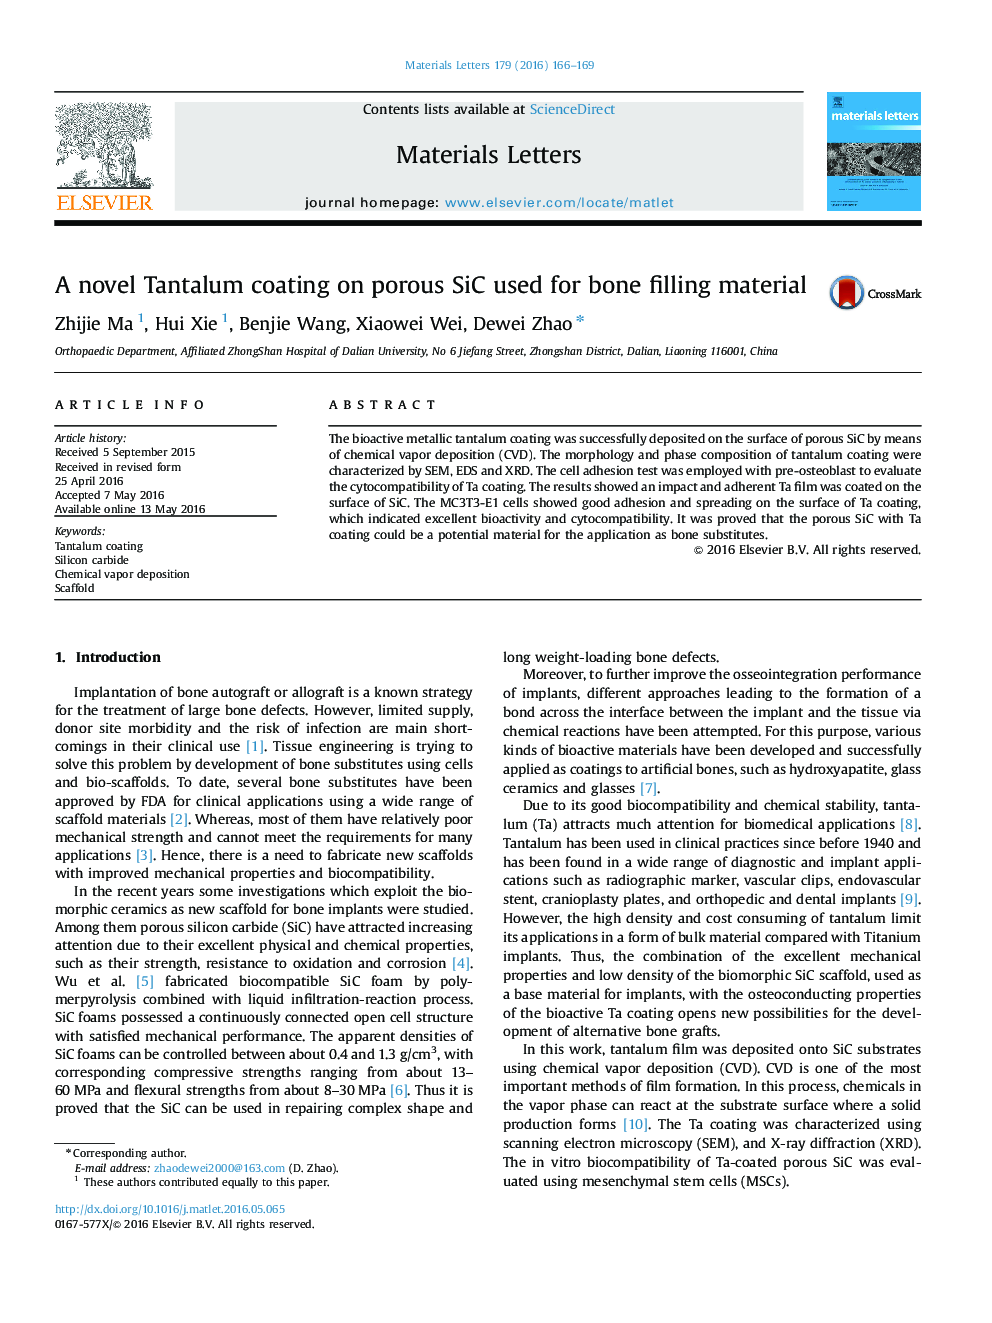 A novel Tantalum coating on porous SiC used for bone filling material